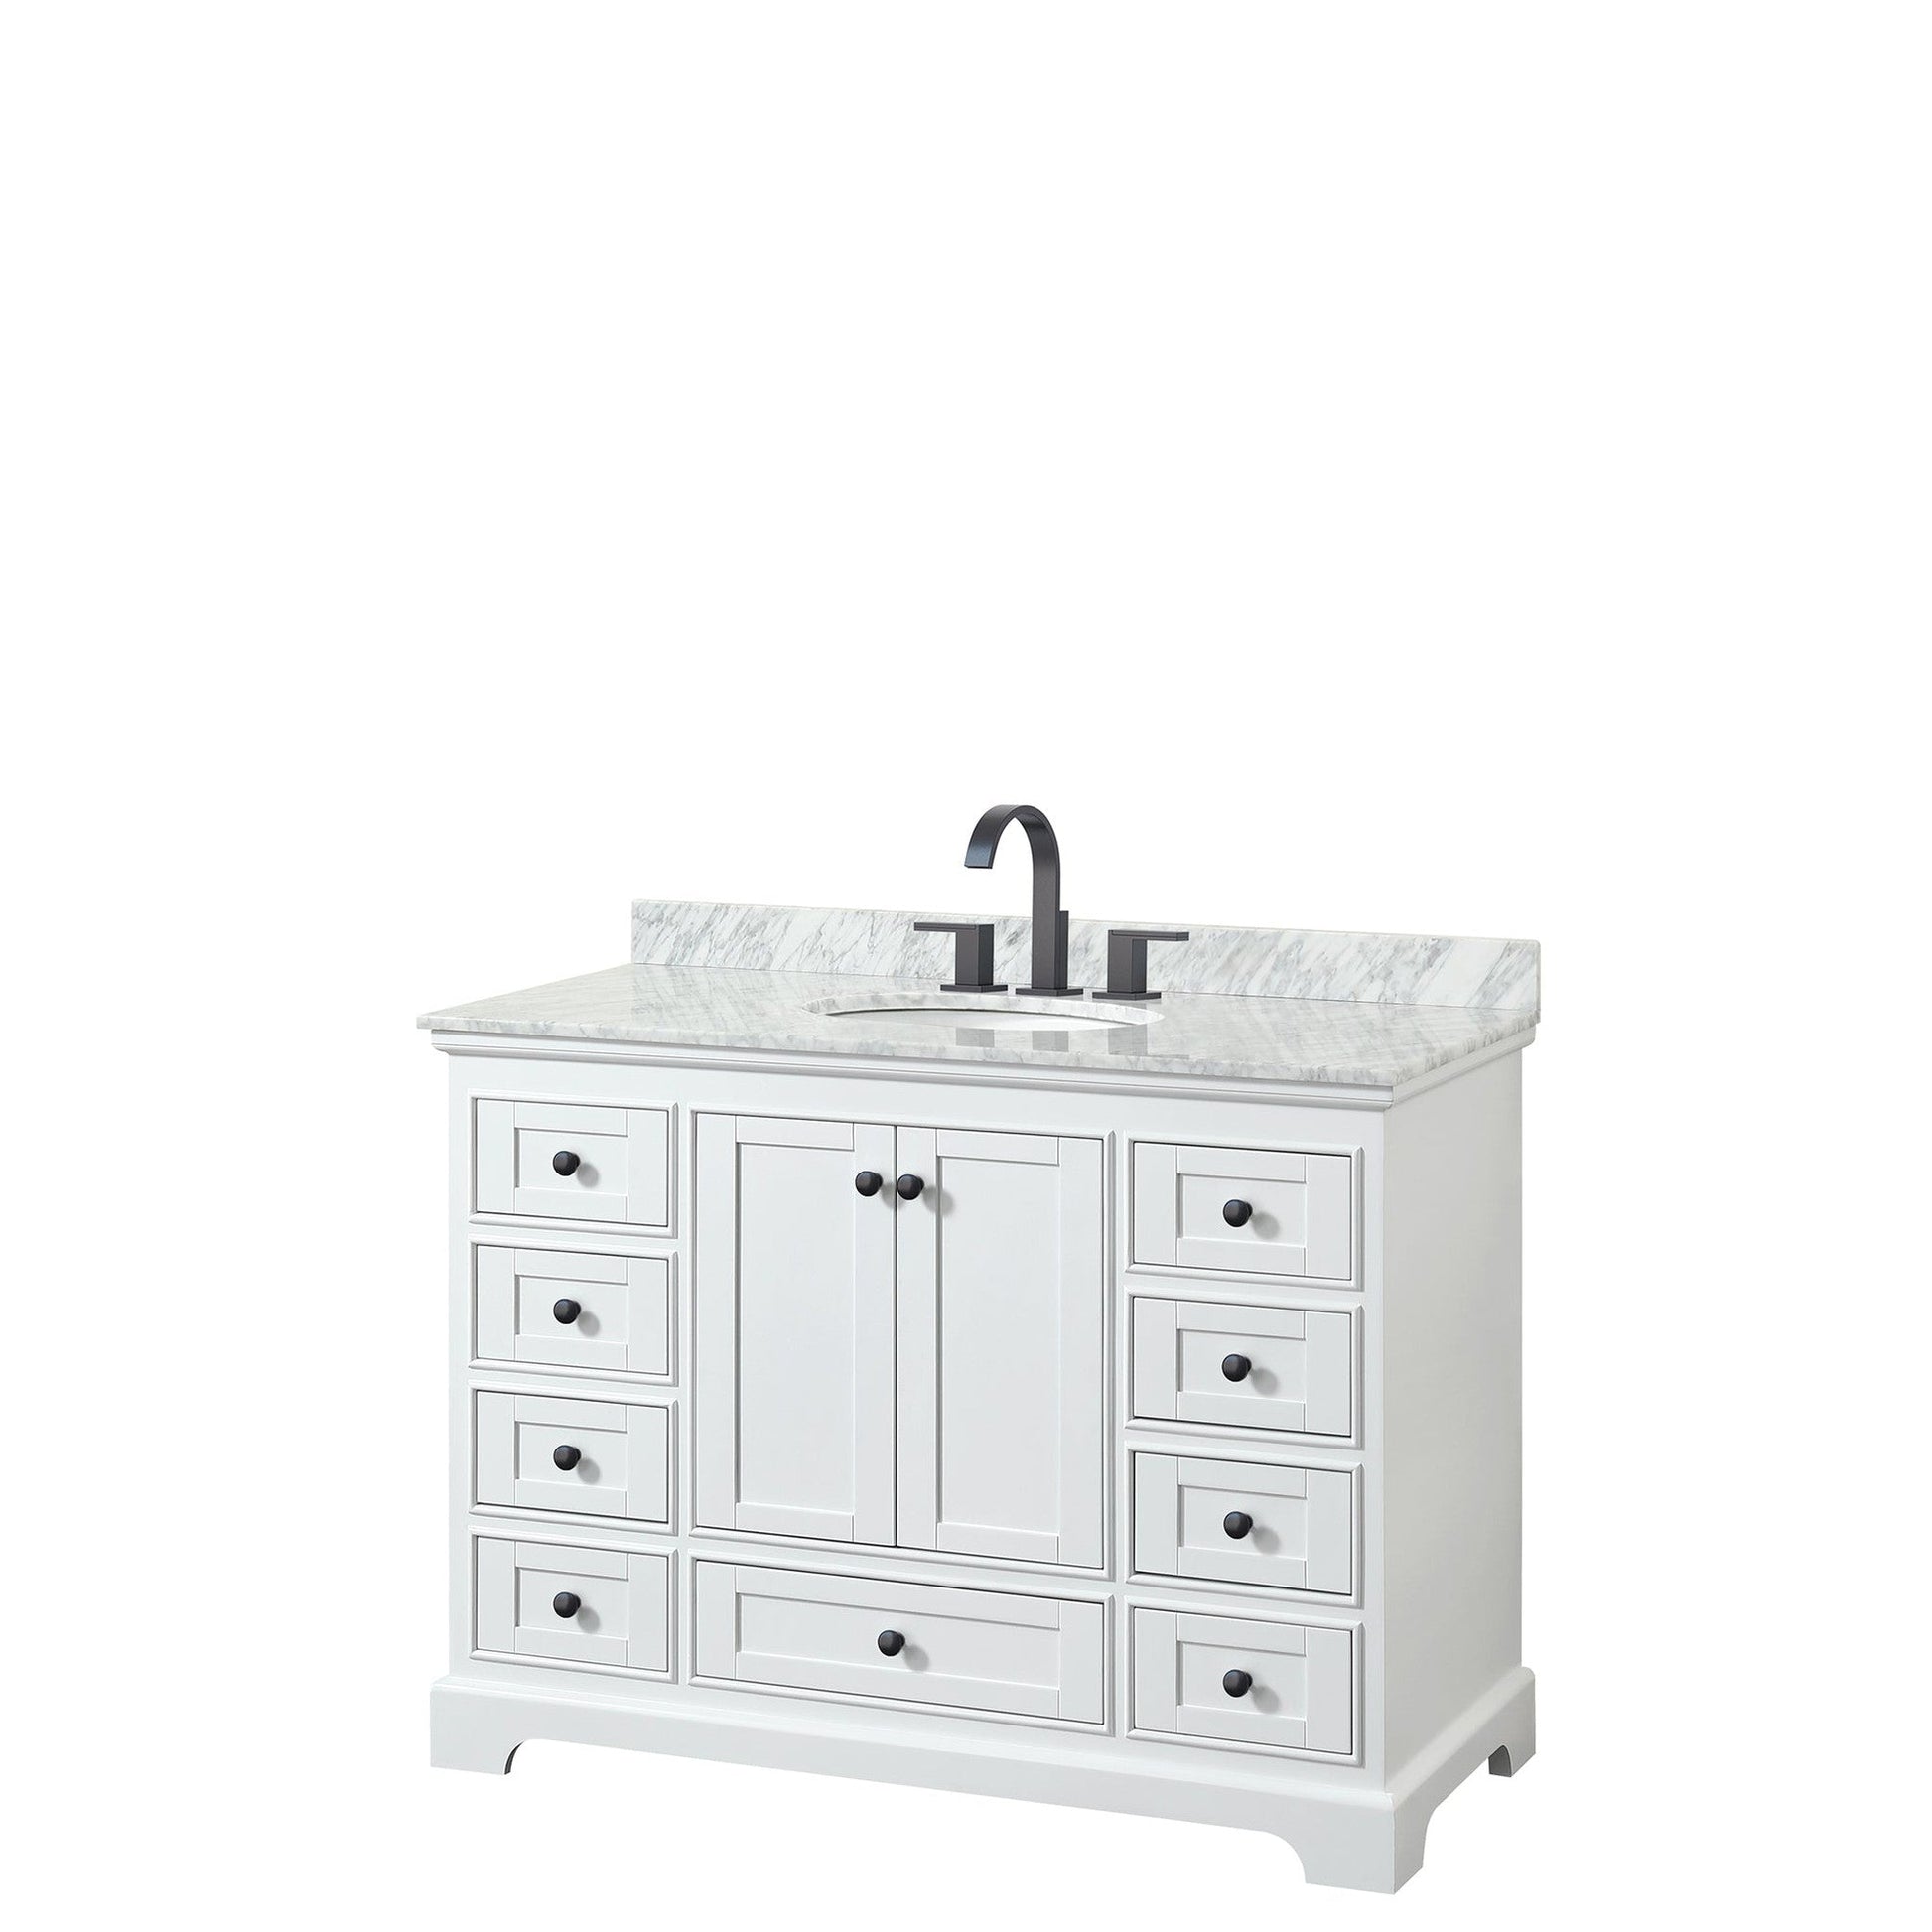 Deborah 48" Single Bathroom Vanity in White, White Carrara Marble Countertop, Undermount Oval Sink, Matte Black Trim